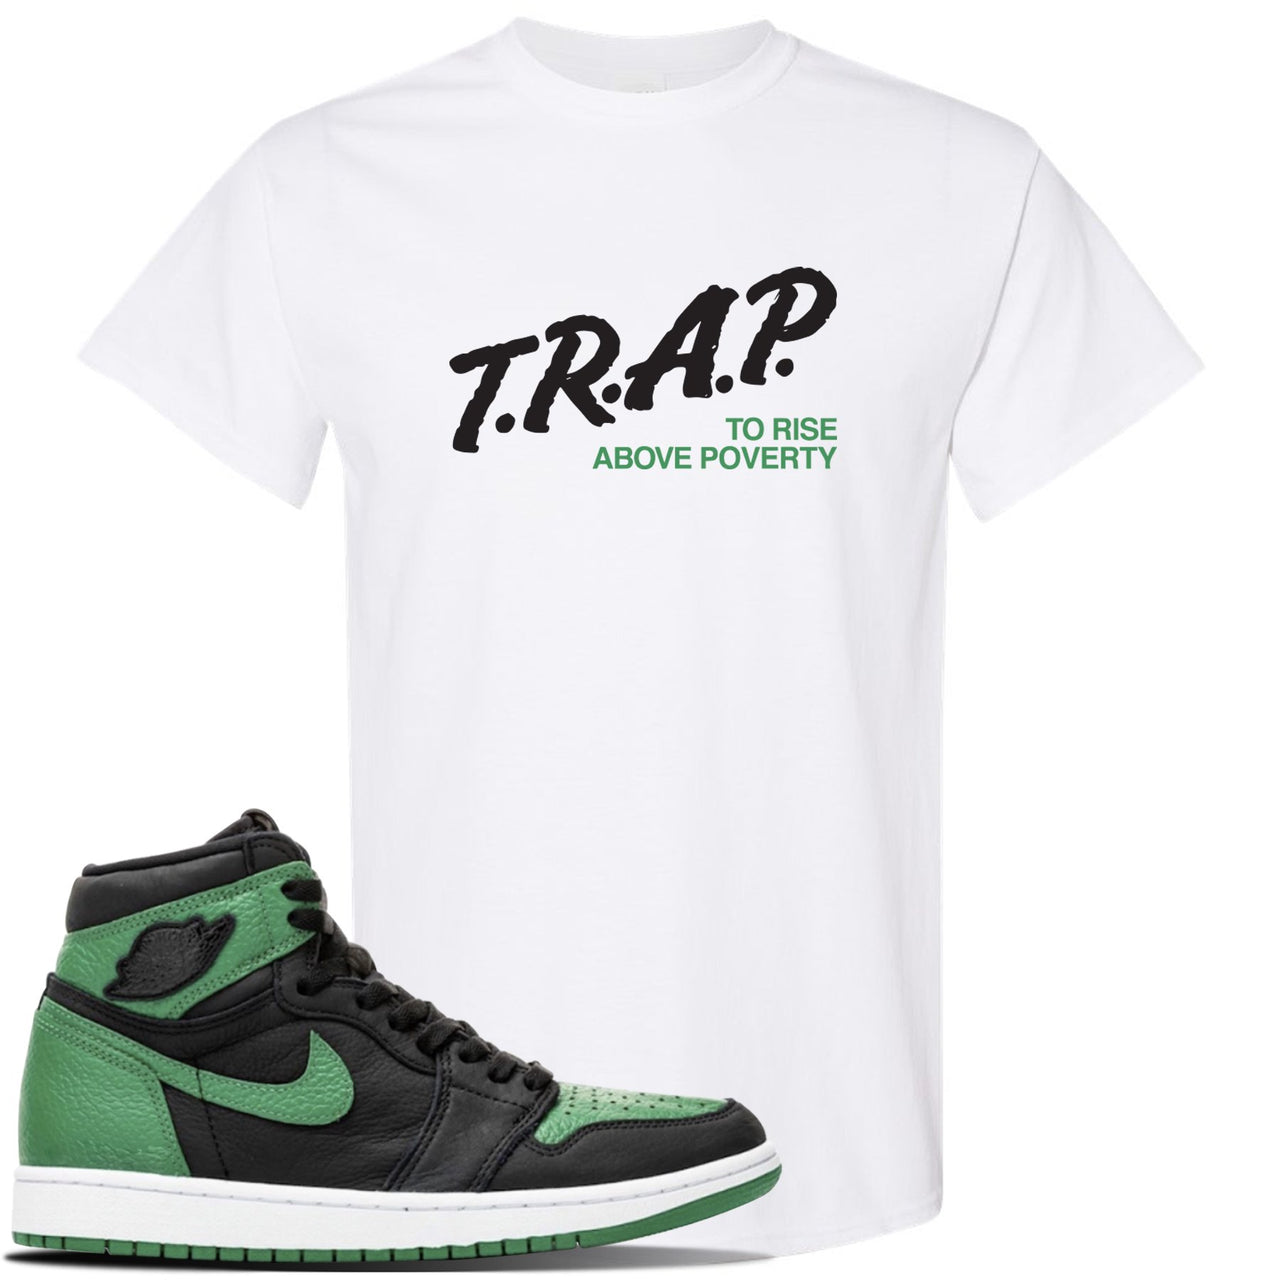 Jordan 1 Retro High OG Pine Green Gym Sneaker White T Shirt | Tees to match Air Jordan 1 Retro High OG Pine Green Gym Shoes | Trap To Rise Above Poverty